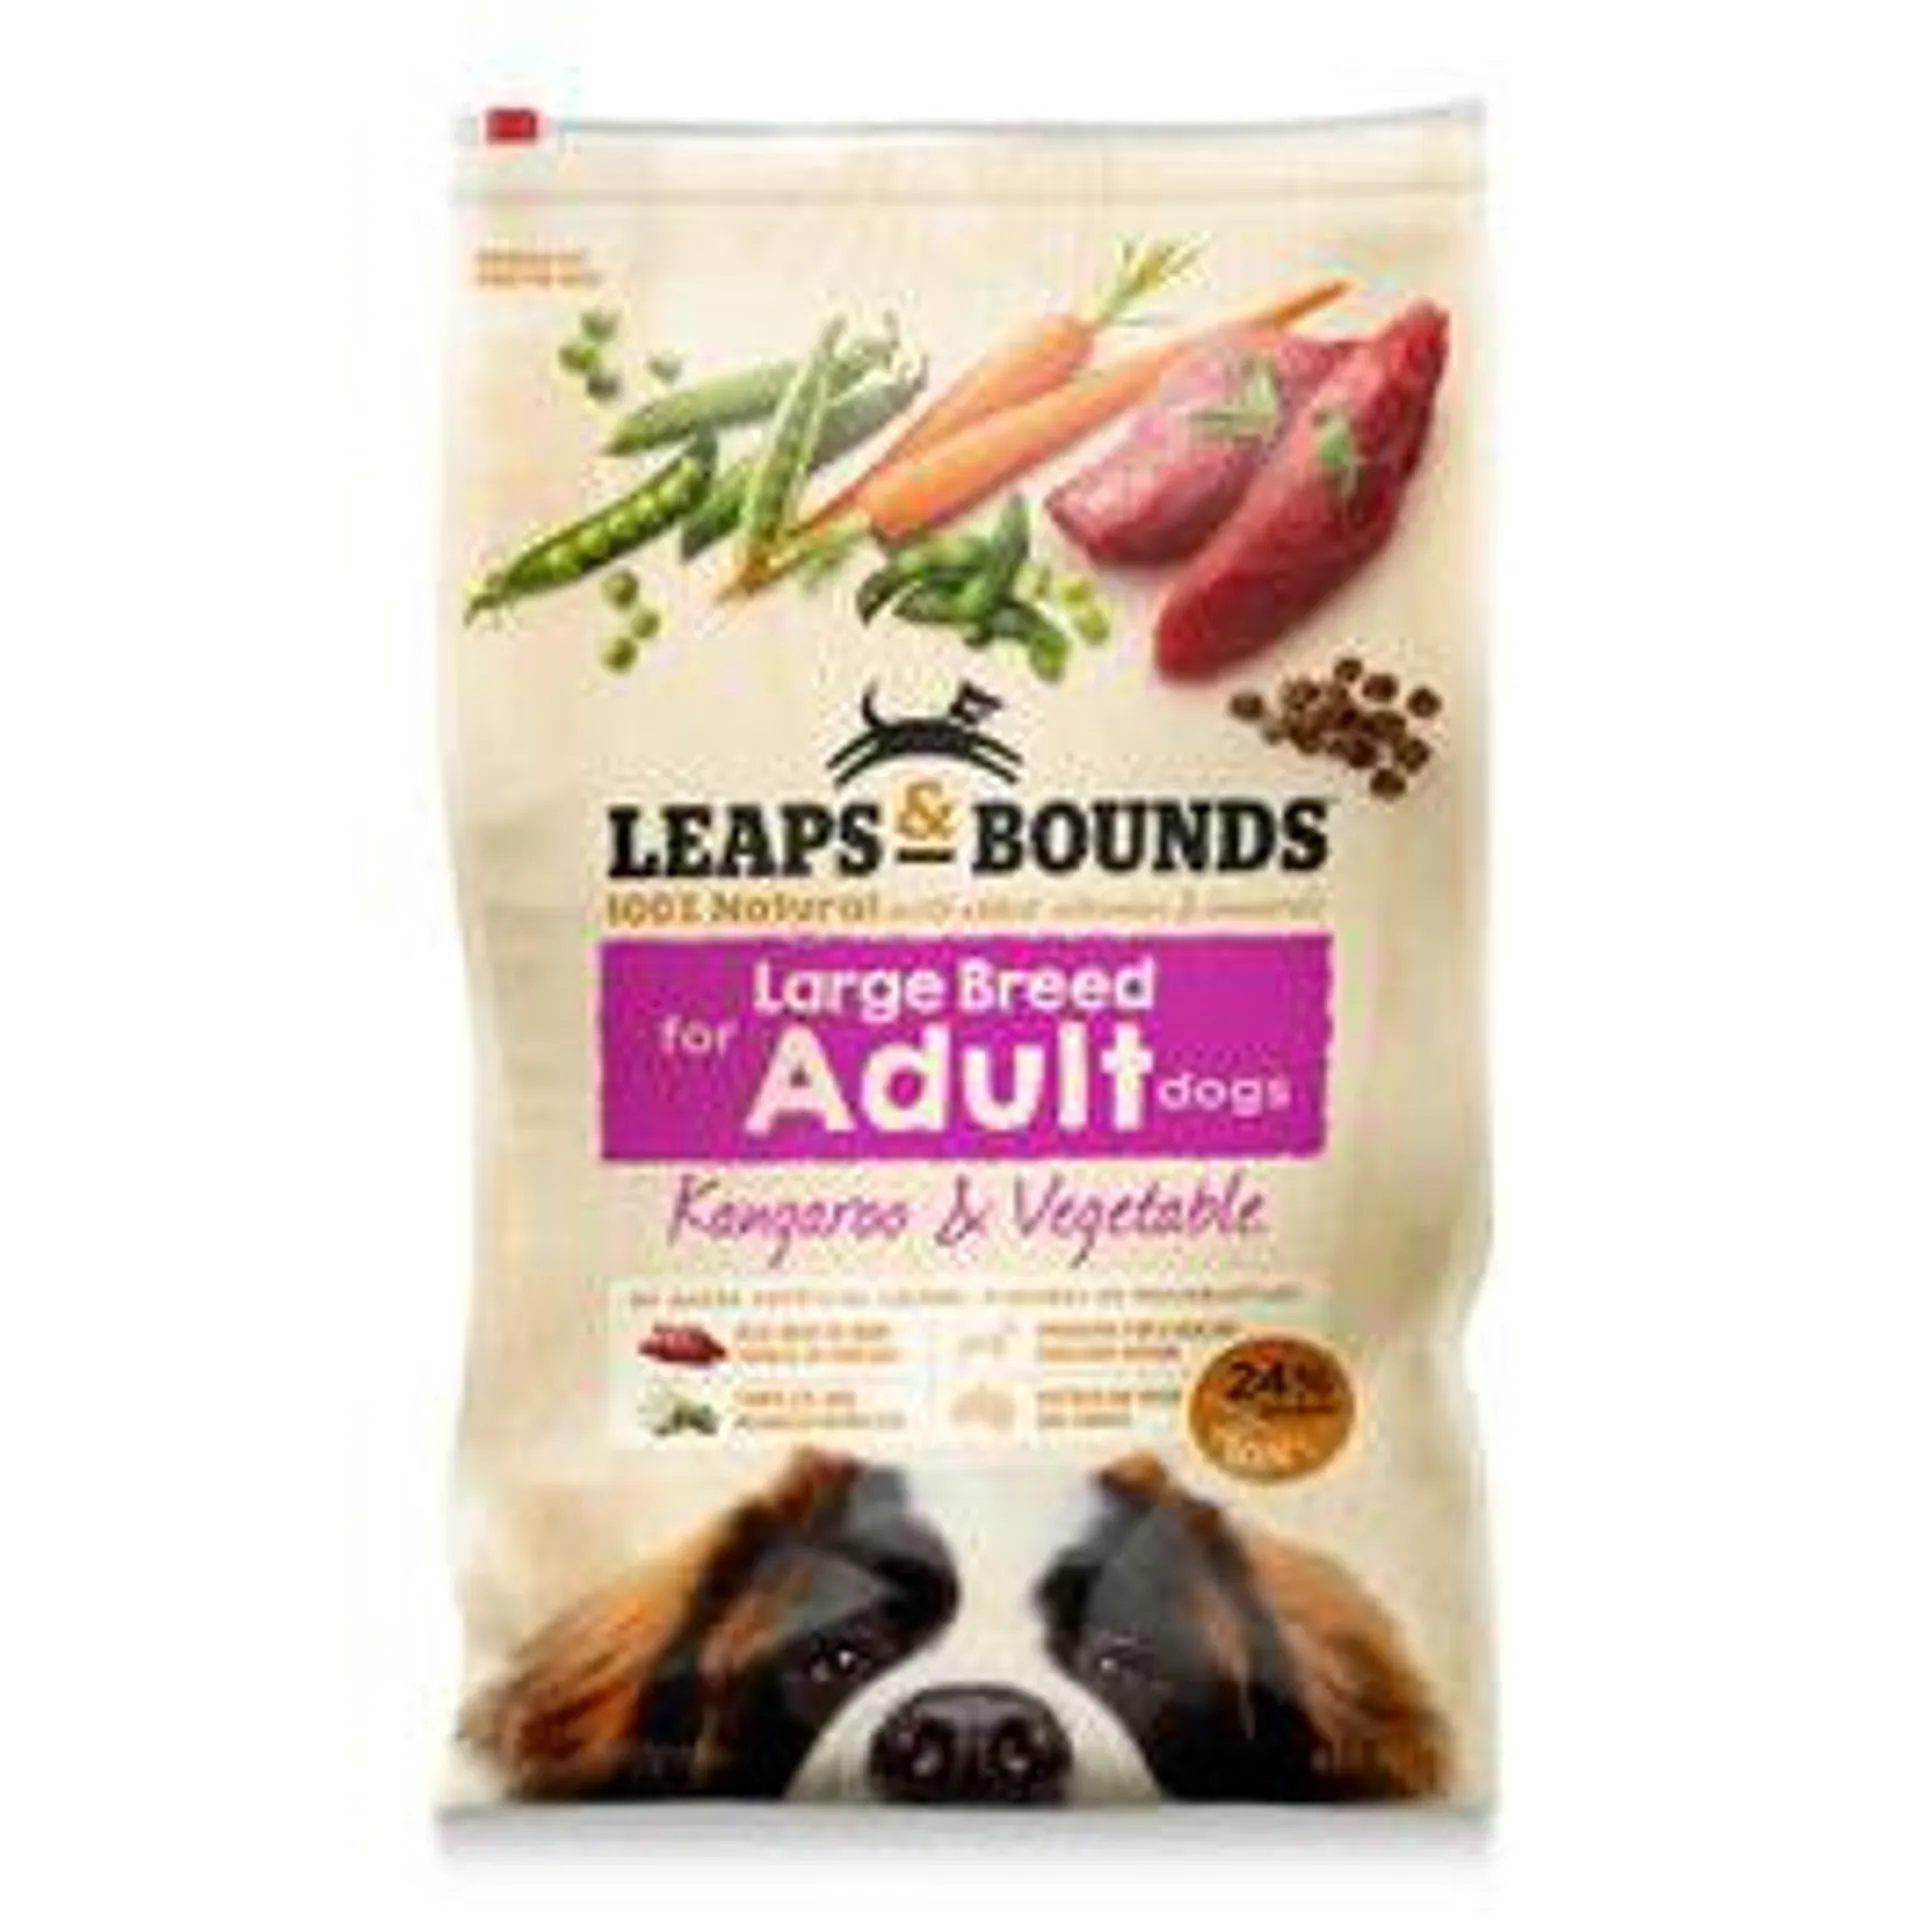 Leaps & Bounds Kangaroo & Vegetable Large Breed Adult Dog Food 15Kg